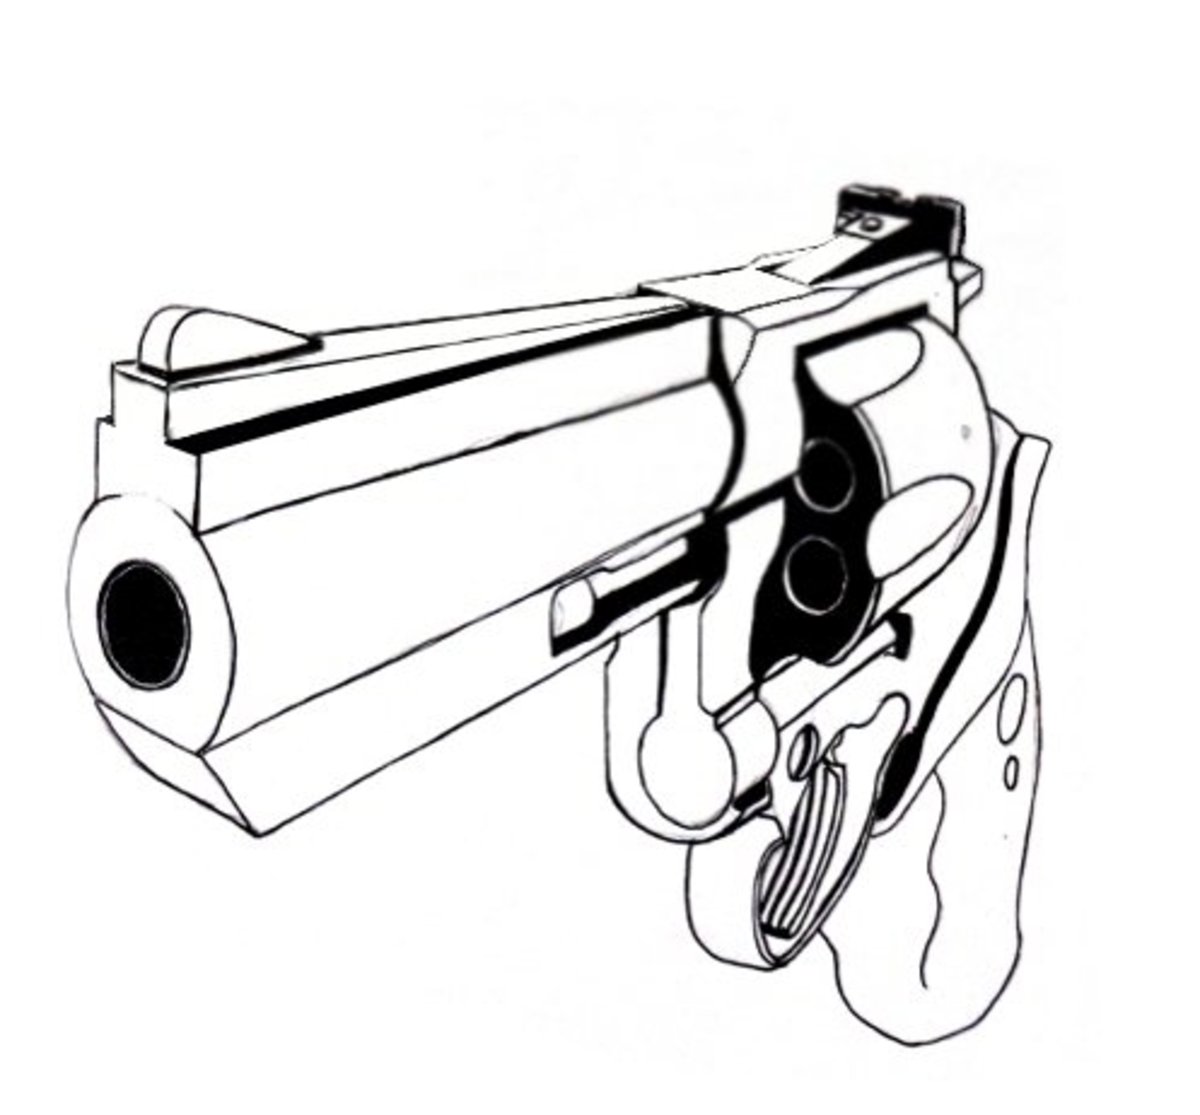 How to Draw a Gun—Full Tutorial